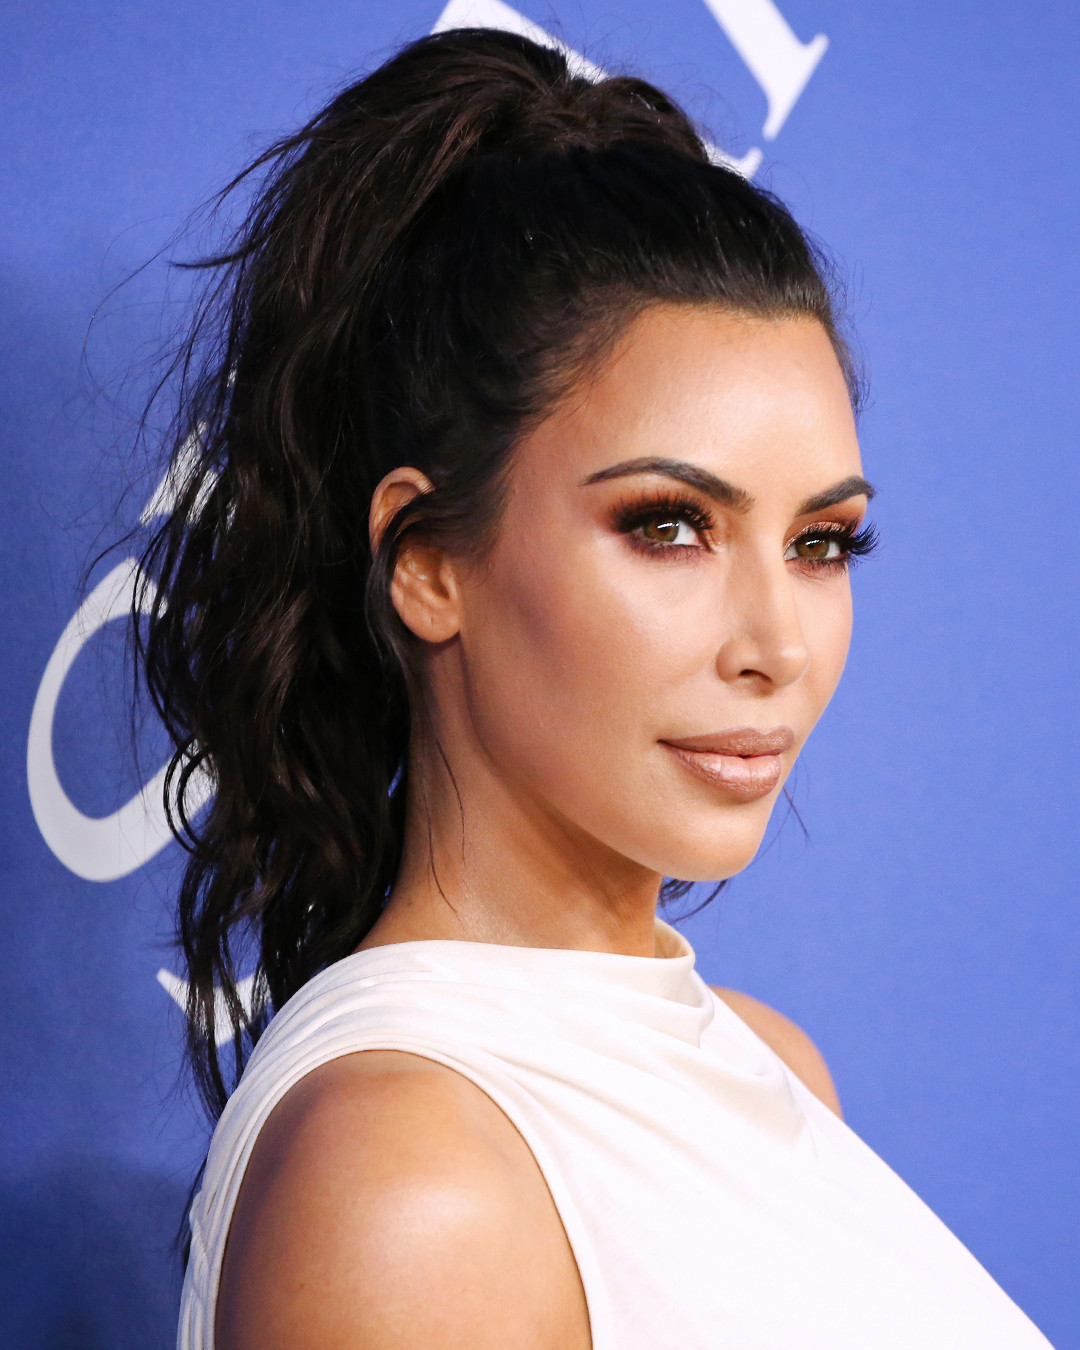 Kim Kardashian Shares Her Under-$10 Must-Haves - E!